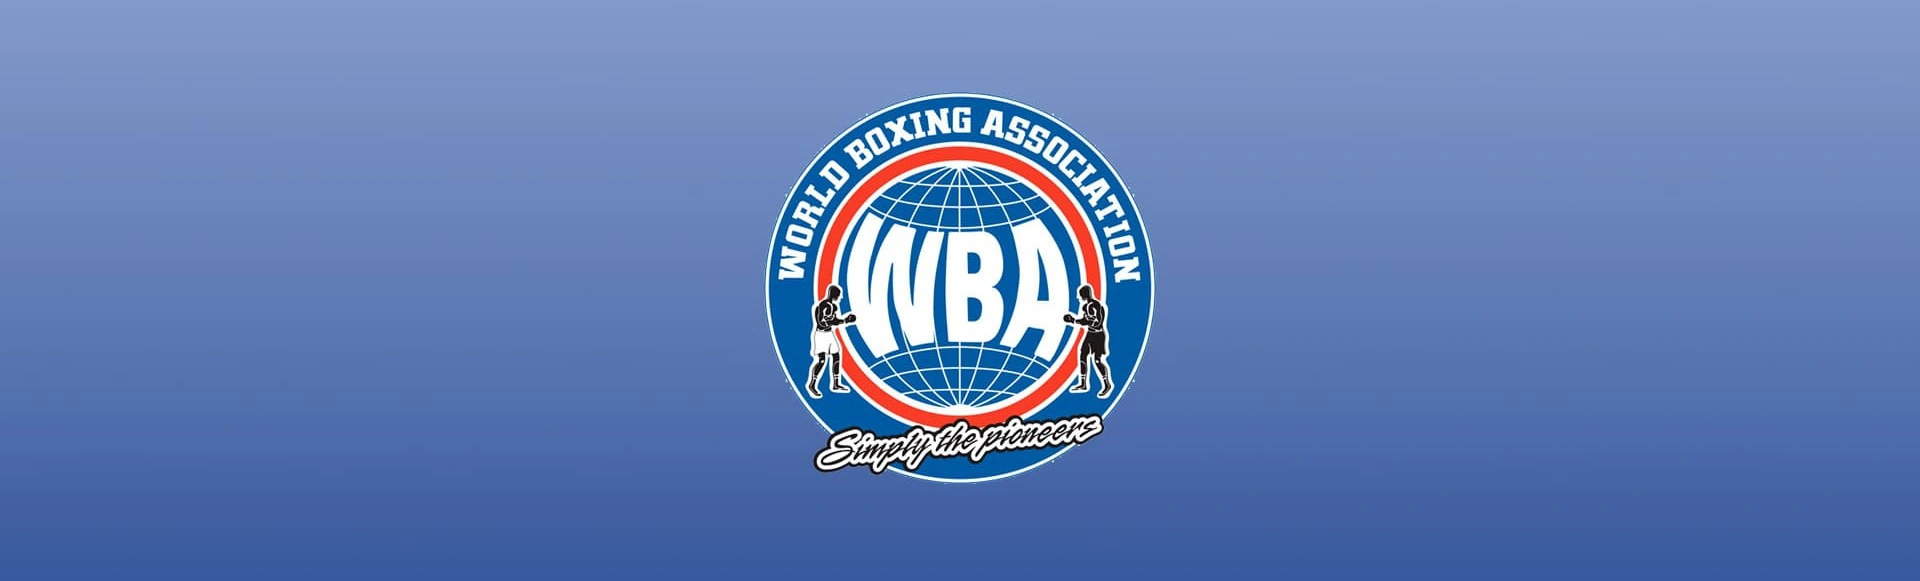 WBA Light Heavyweight World Championship - BIVOL vs RAMIREZ